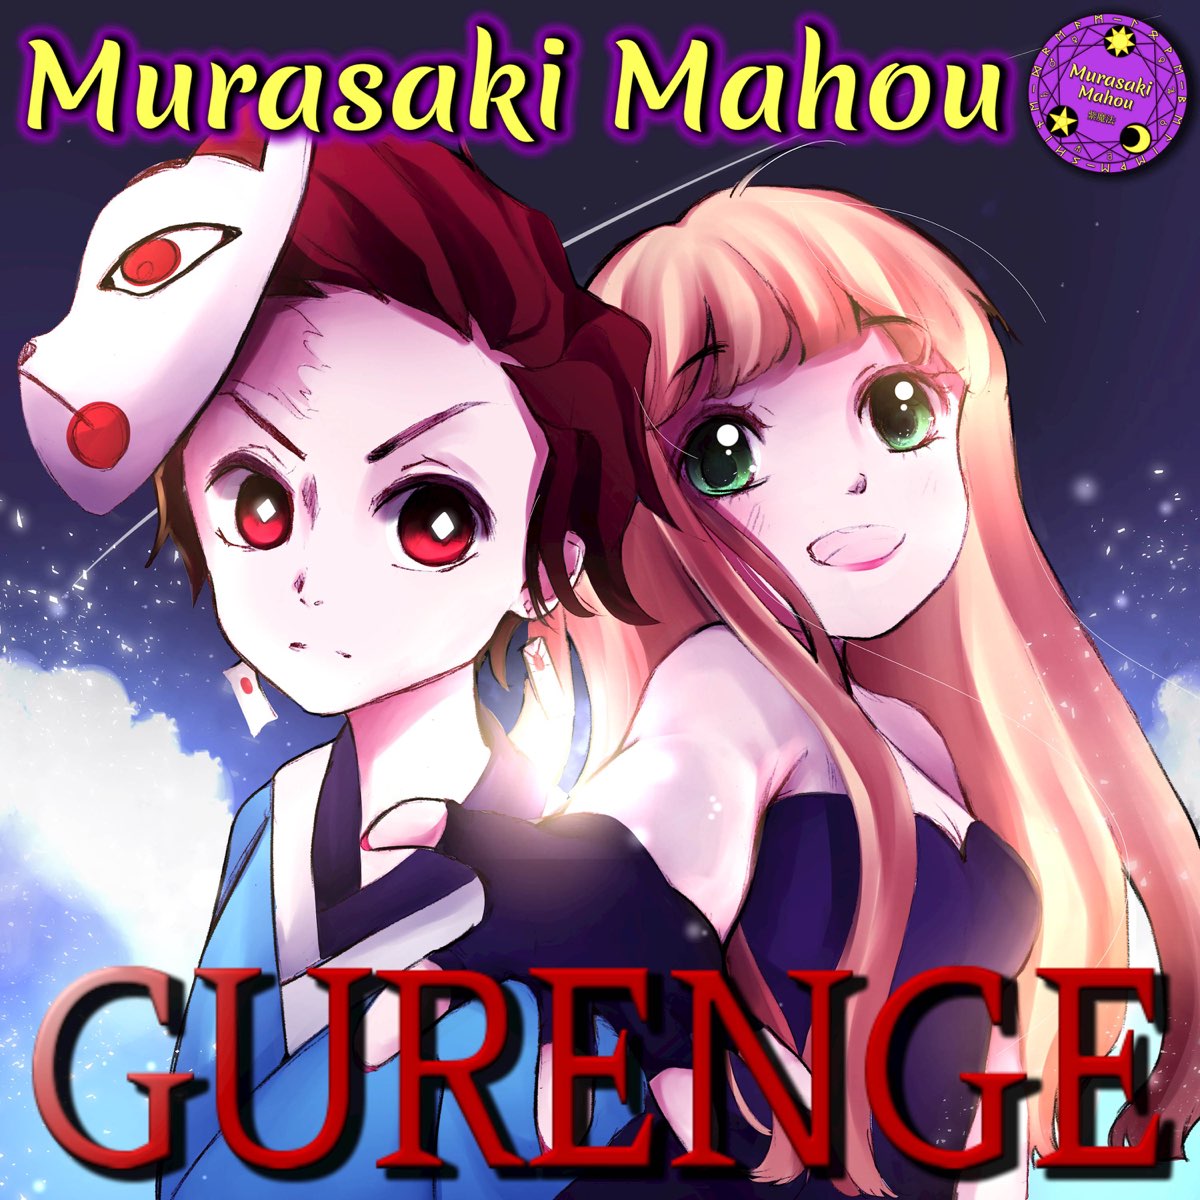 Gurenge (From Demon Slayer: Kimetsu no yaiba)[Cover Version] - Single -  Album by Murasaki Mahou - Apple Music